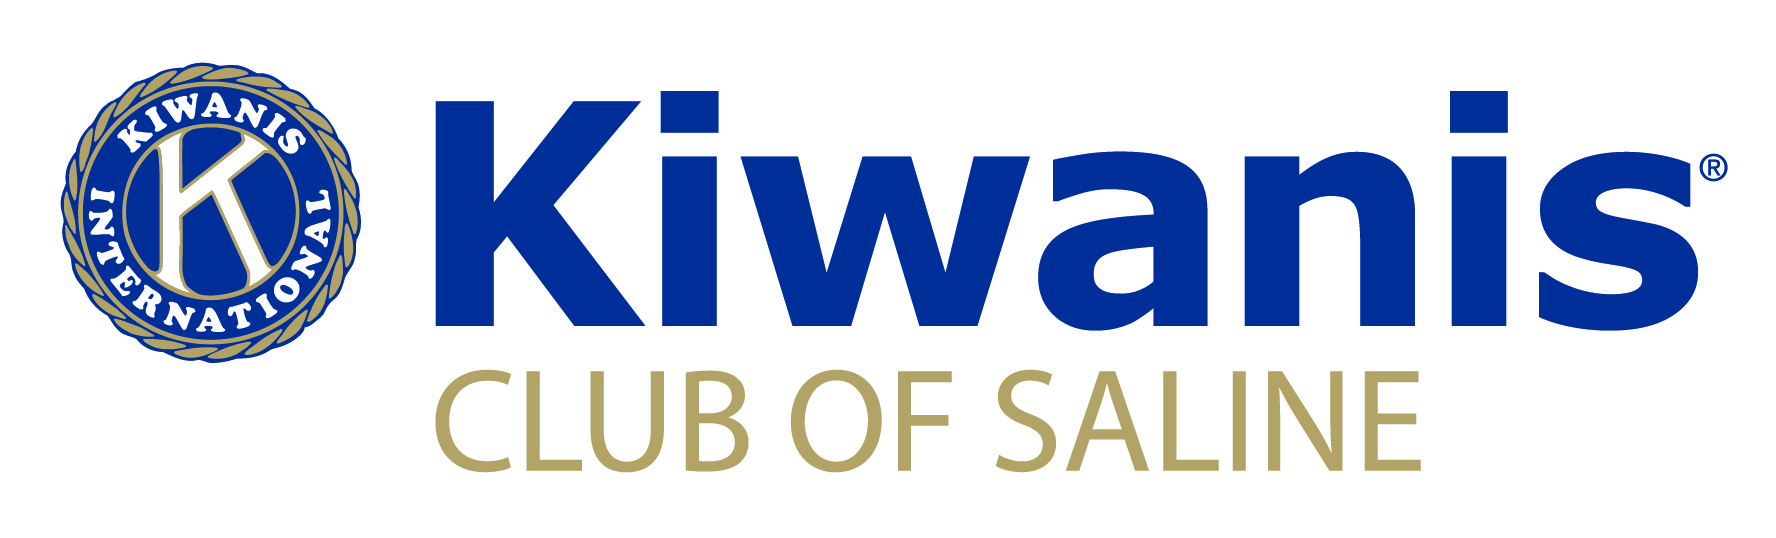 Kiwanis Club of Saline, MI